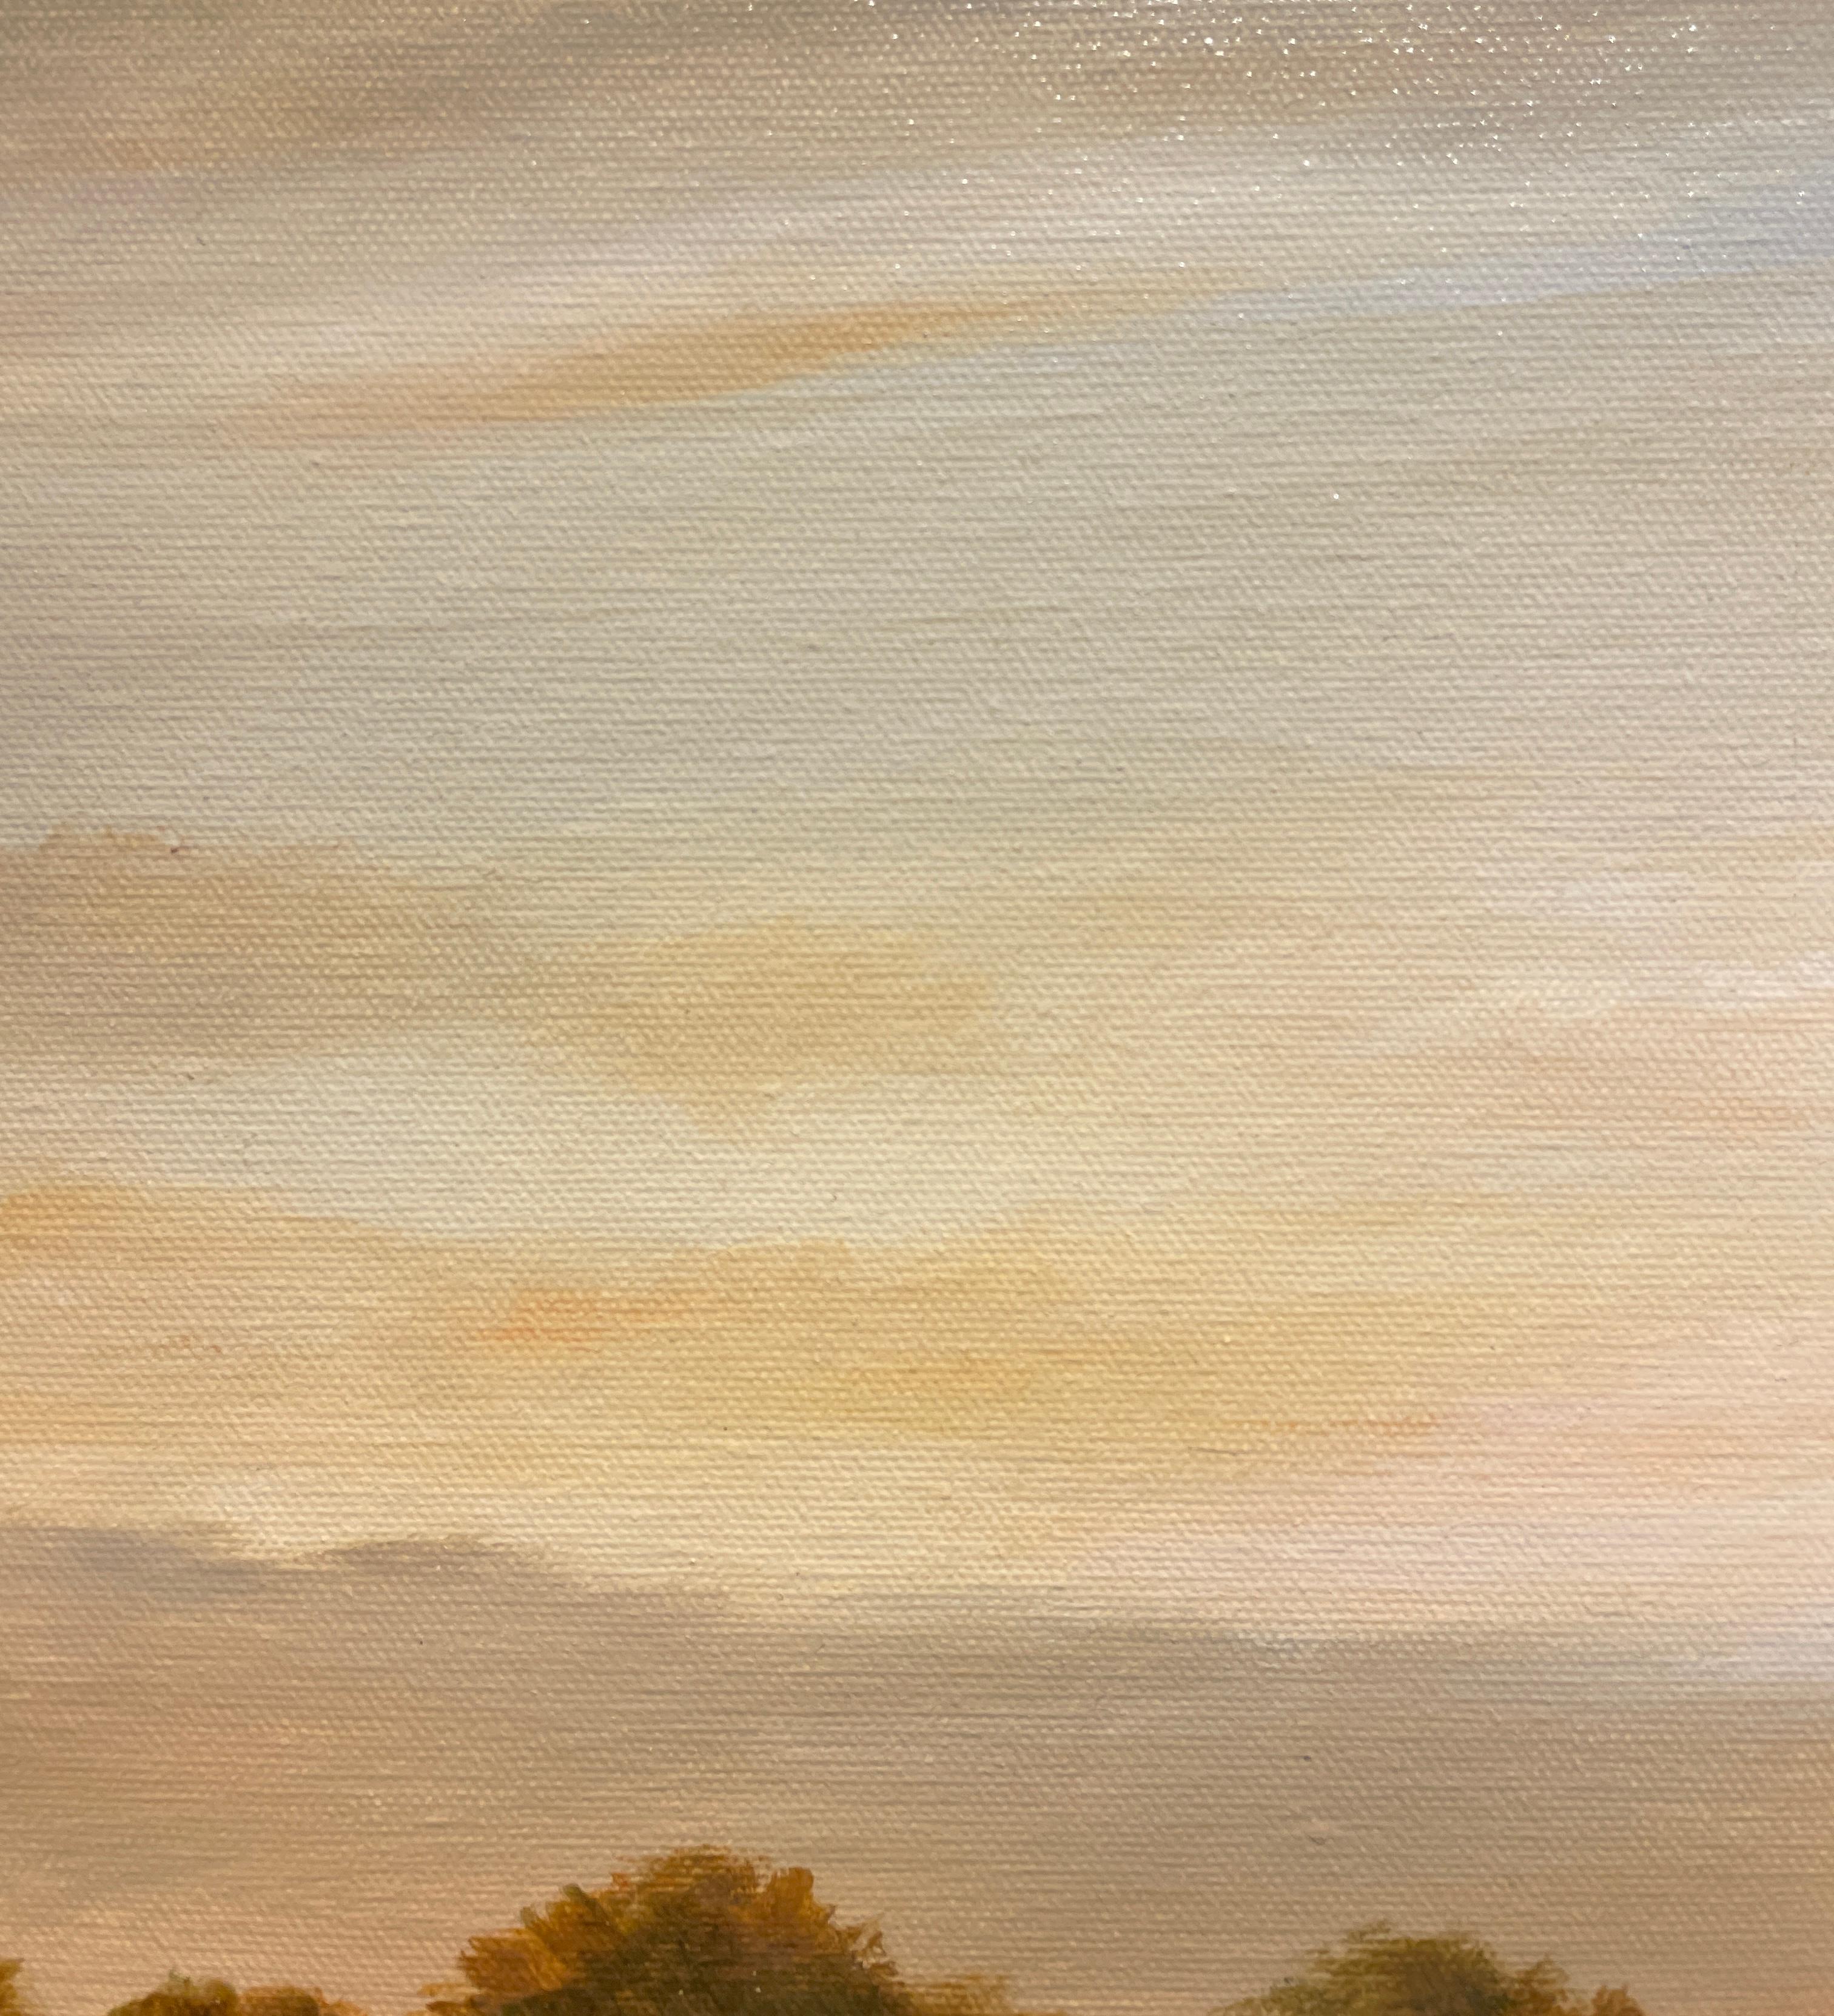 Creek Bend at Dusk - Original Oil Painting with a Golden Landscape, River Scene 1